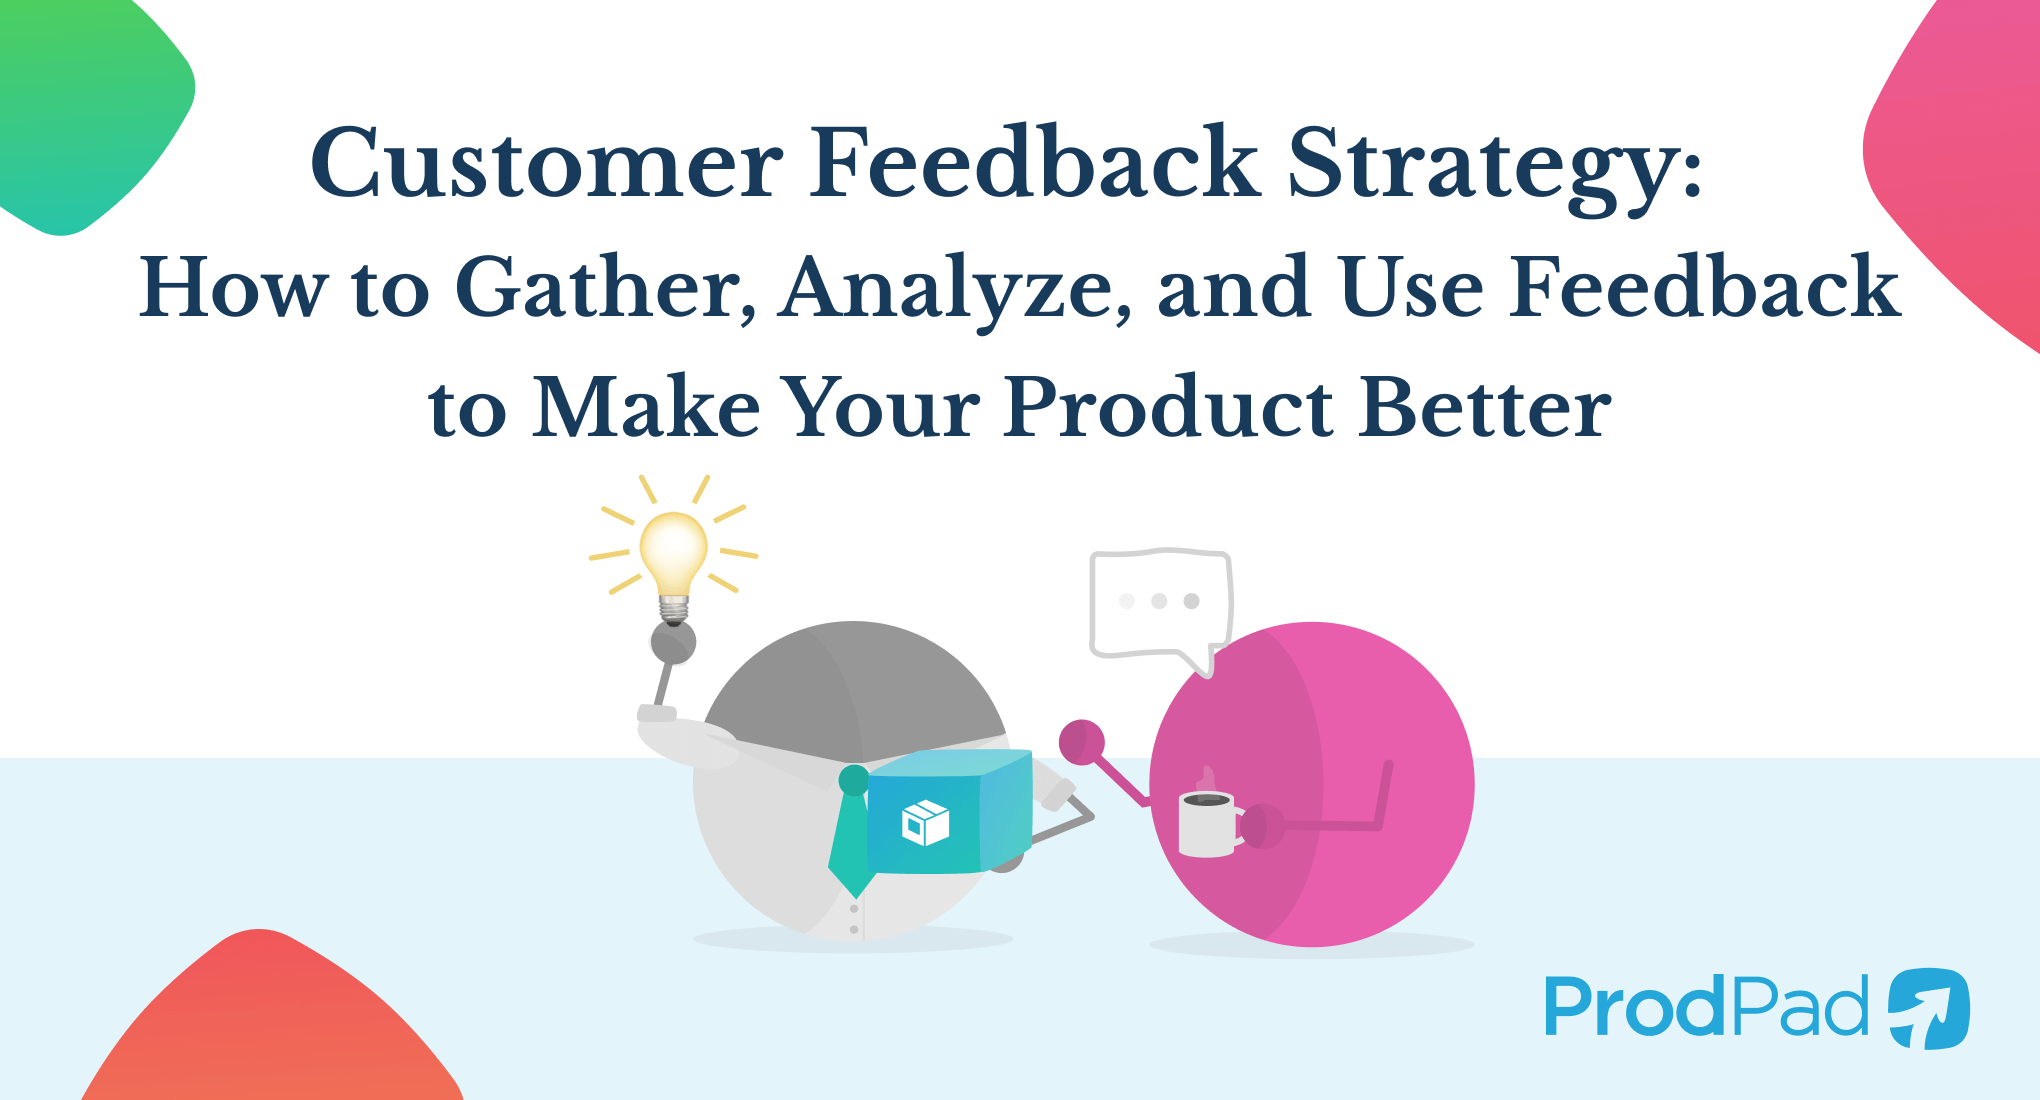 Customer feedback strategy (11 minute read)